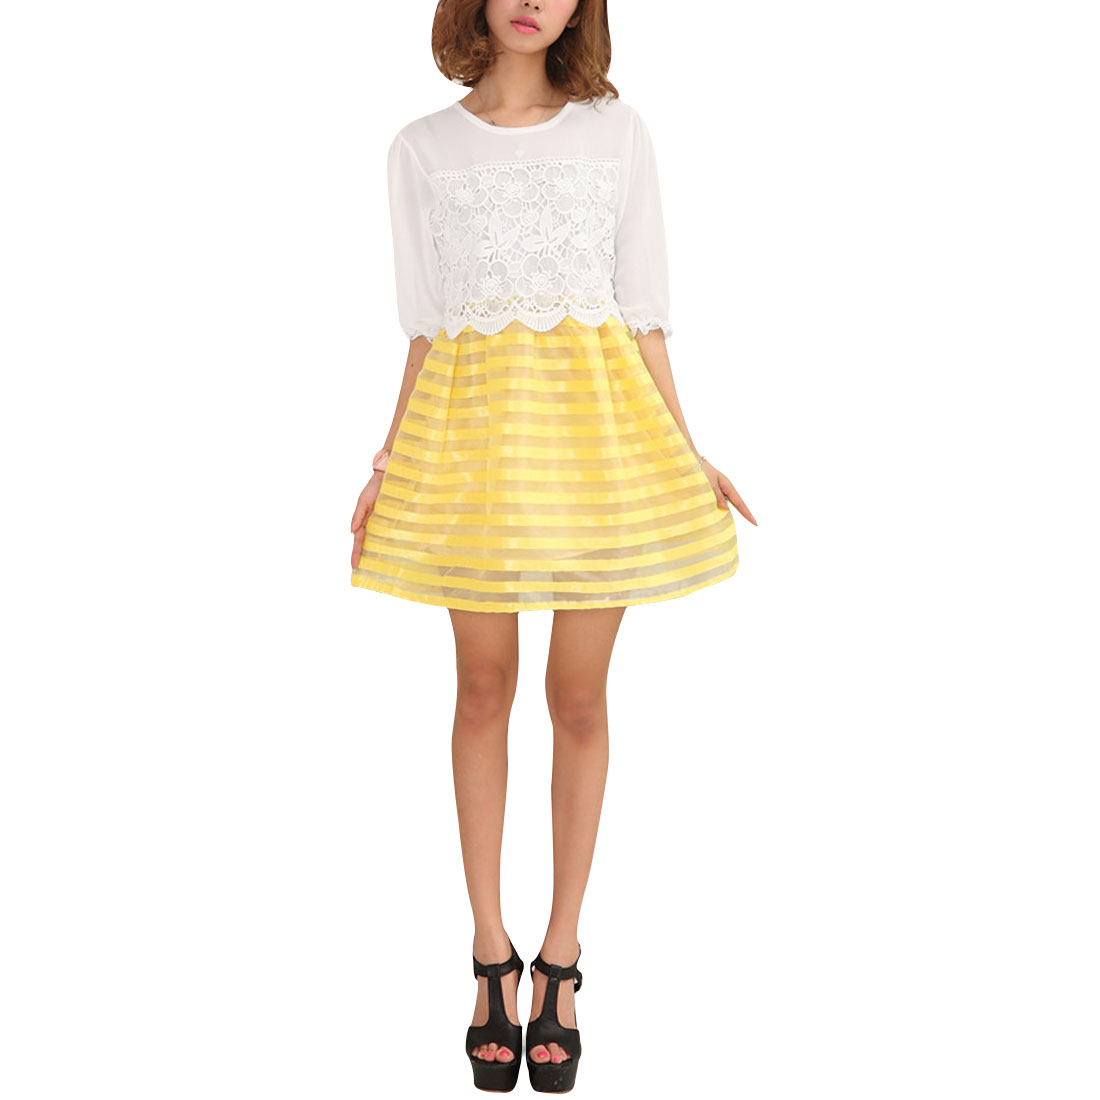 Unique Bargains Women's Chiffon Panel Yellow Summer Pullover Size XS Dress(Size XS / 0)